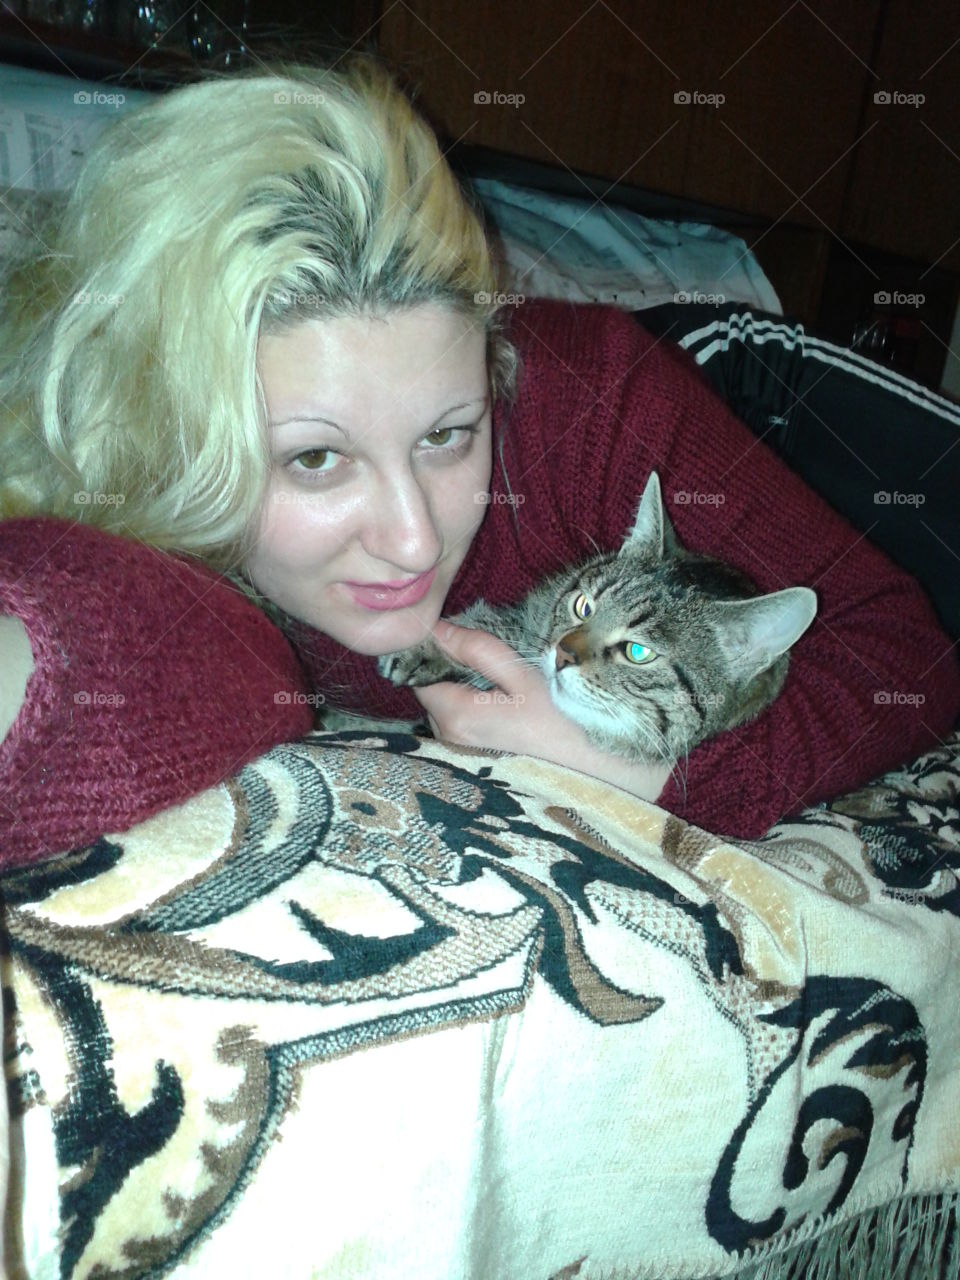 Me and my cat Bastet